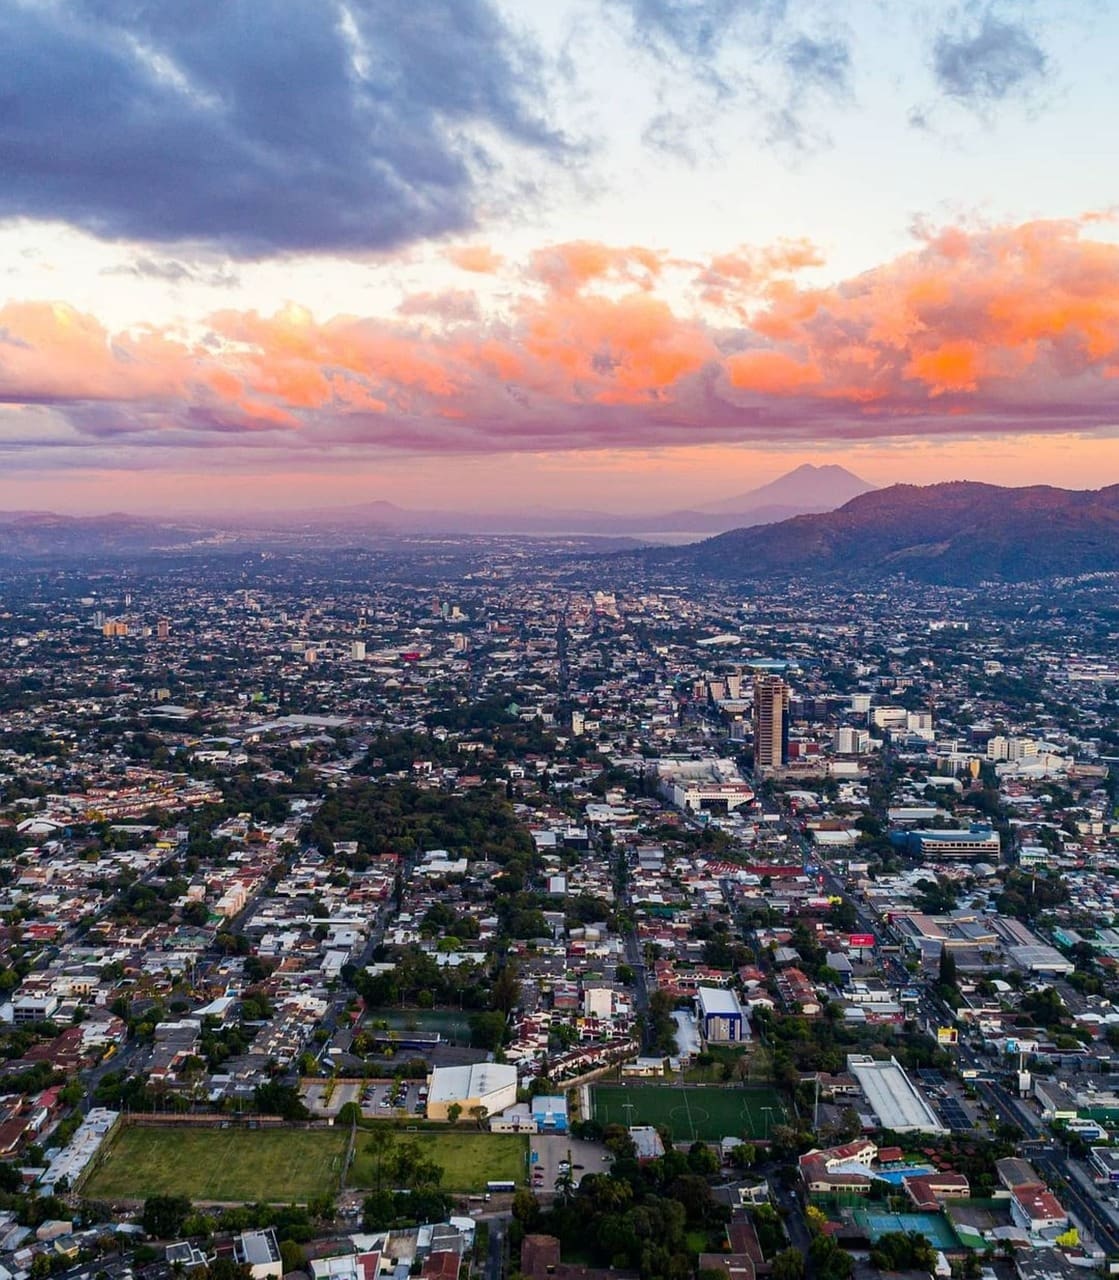 El Salvador city and Mountain View